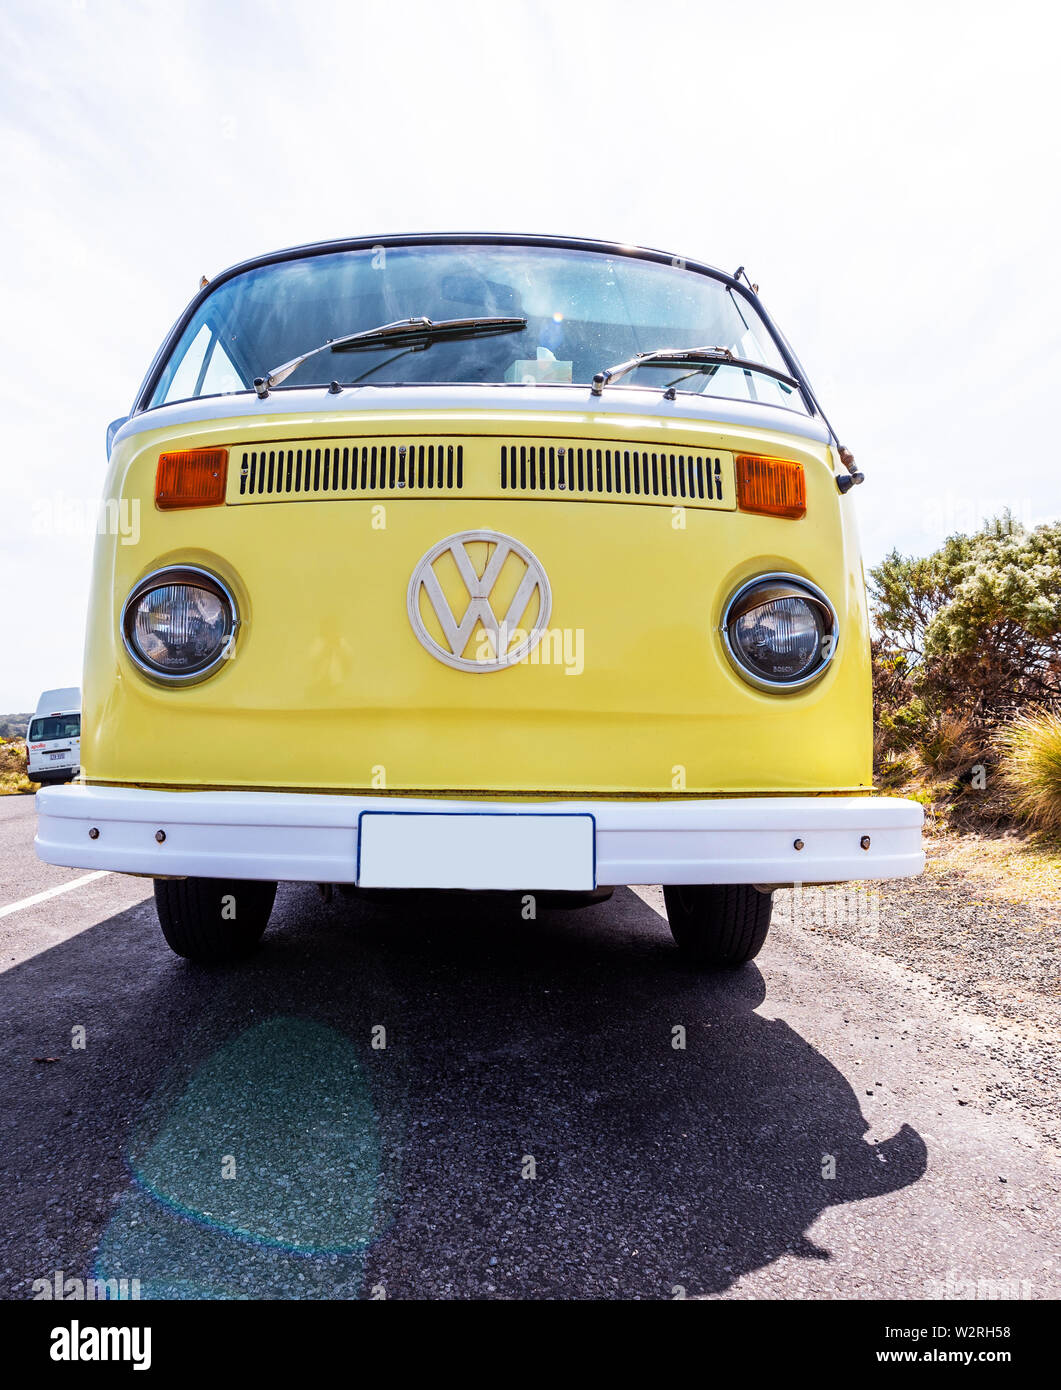 VICTORIA, AUSTRALIA - OCTOBER 30, 2018: Yellow retro Volkswagen van on the road. Stock Photo